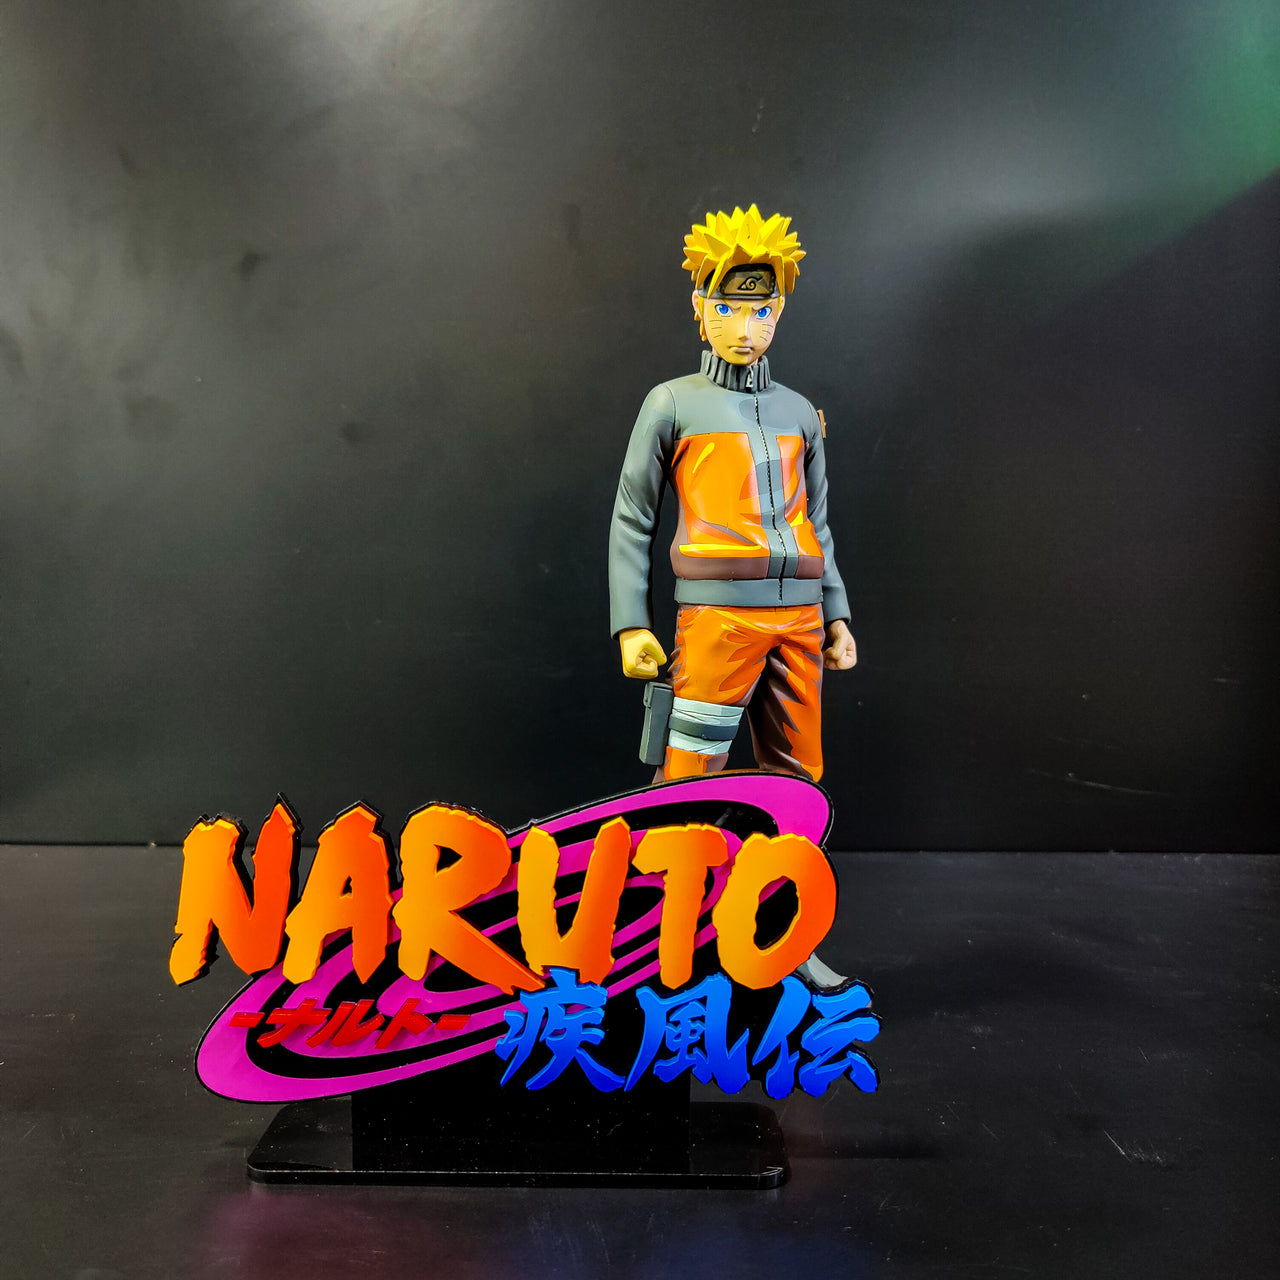 Naruto Shippuden 3D Display Logo